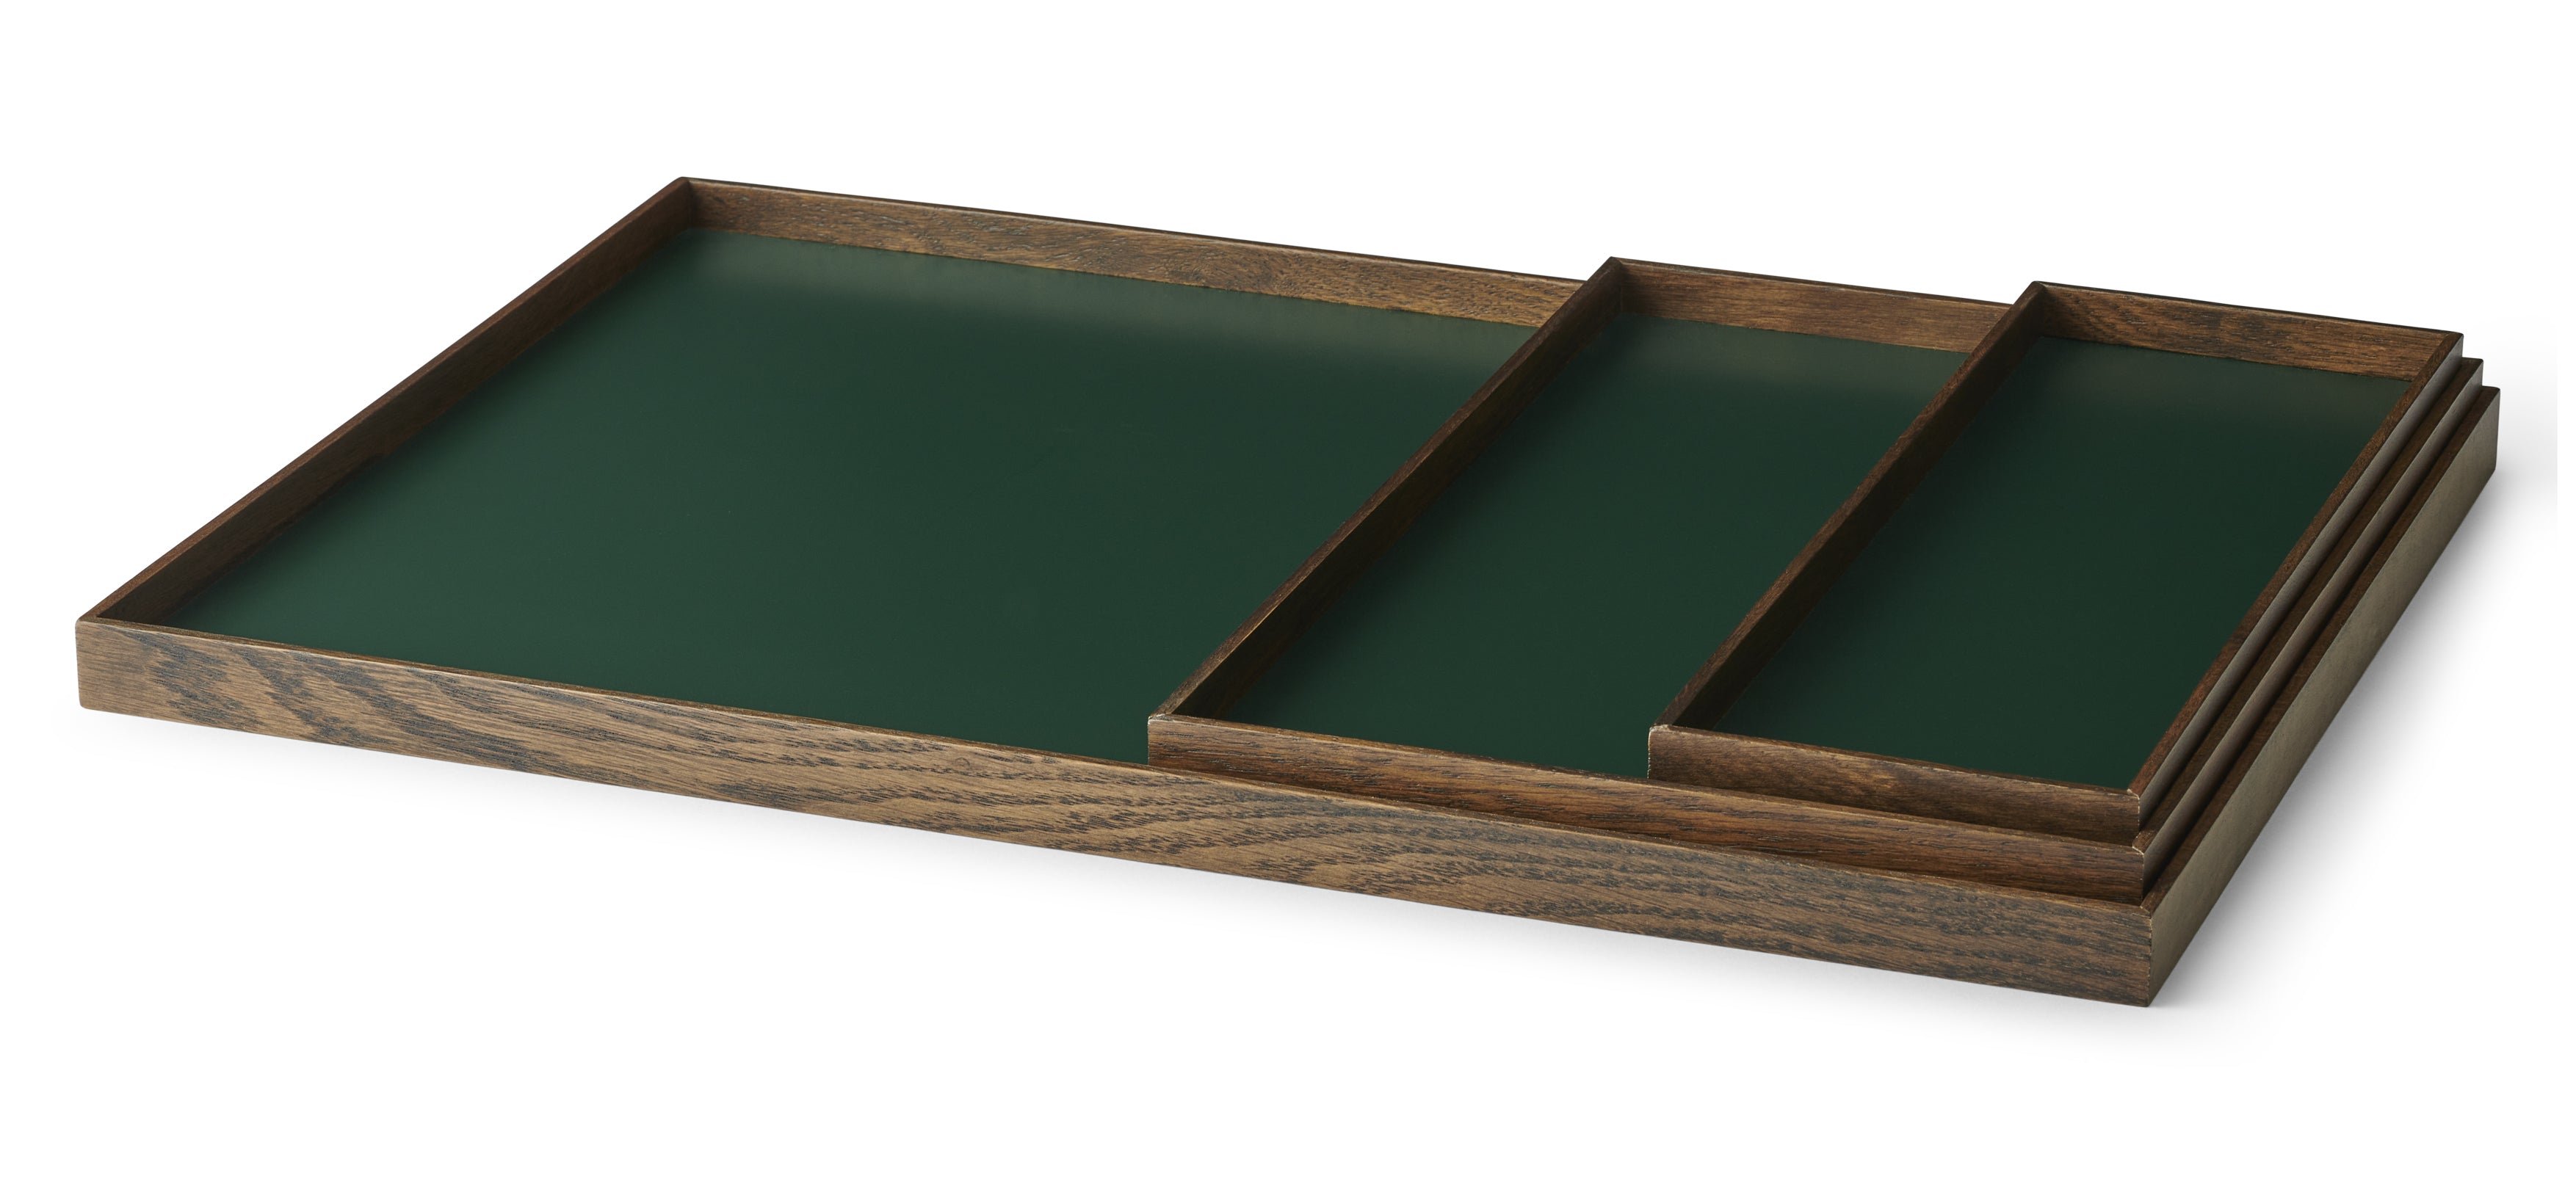 Gejst Frame Tray Smoked Oak/Green, Medium